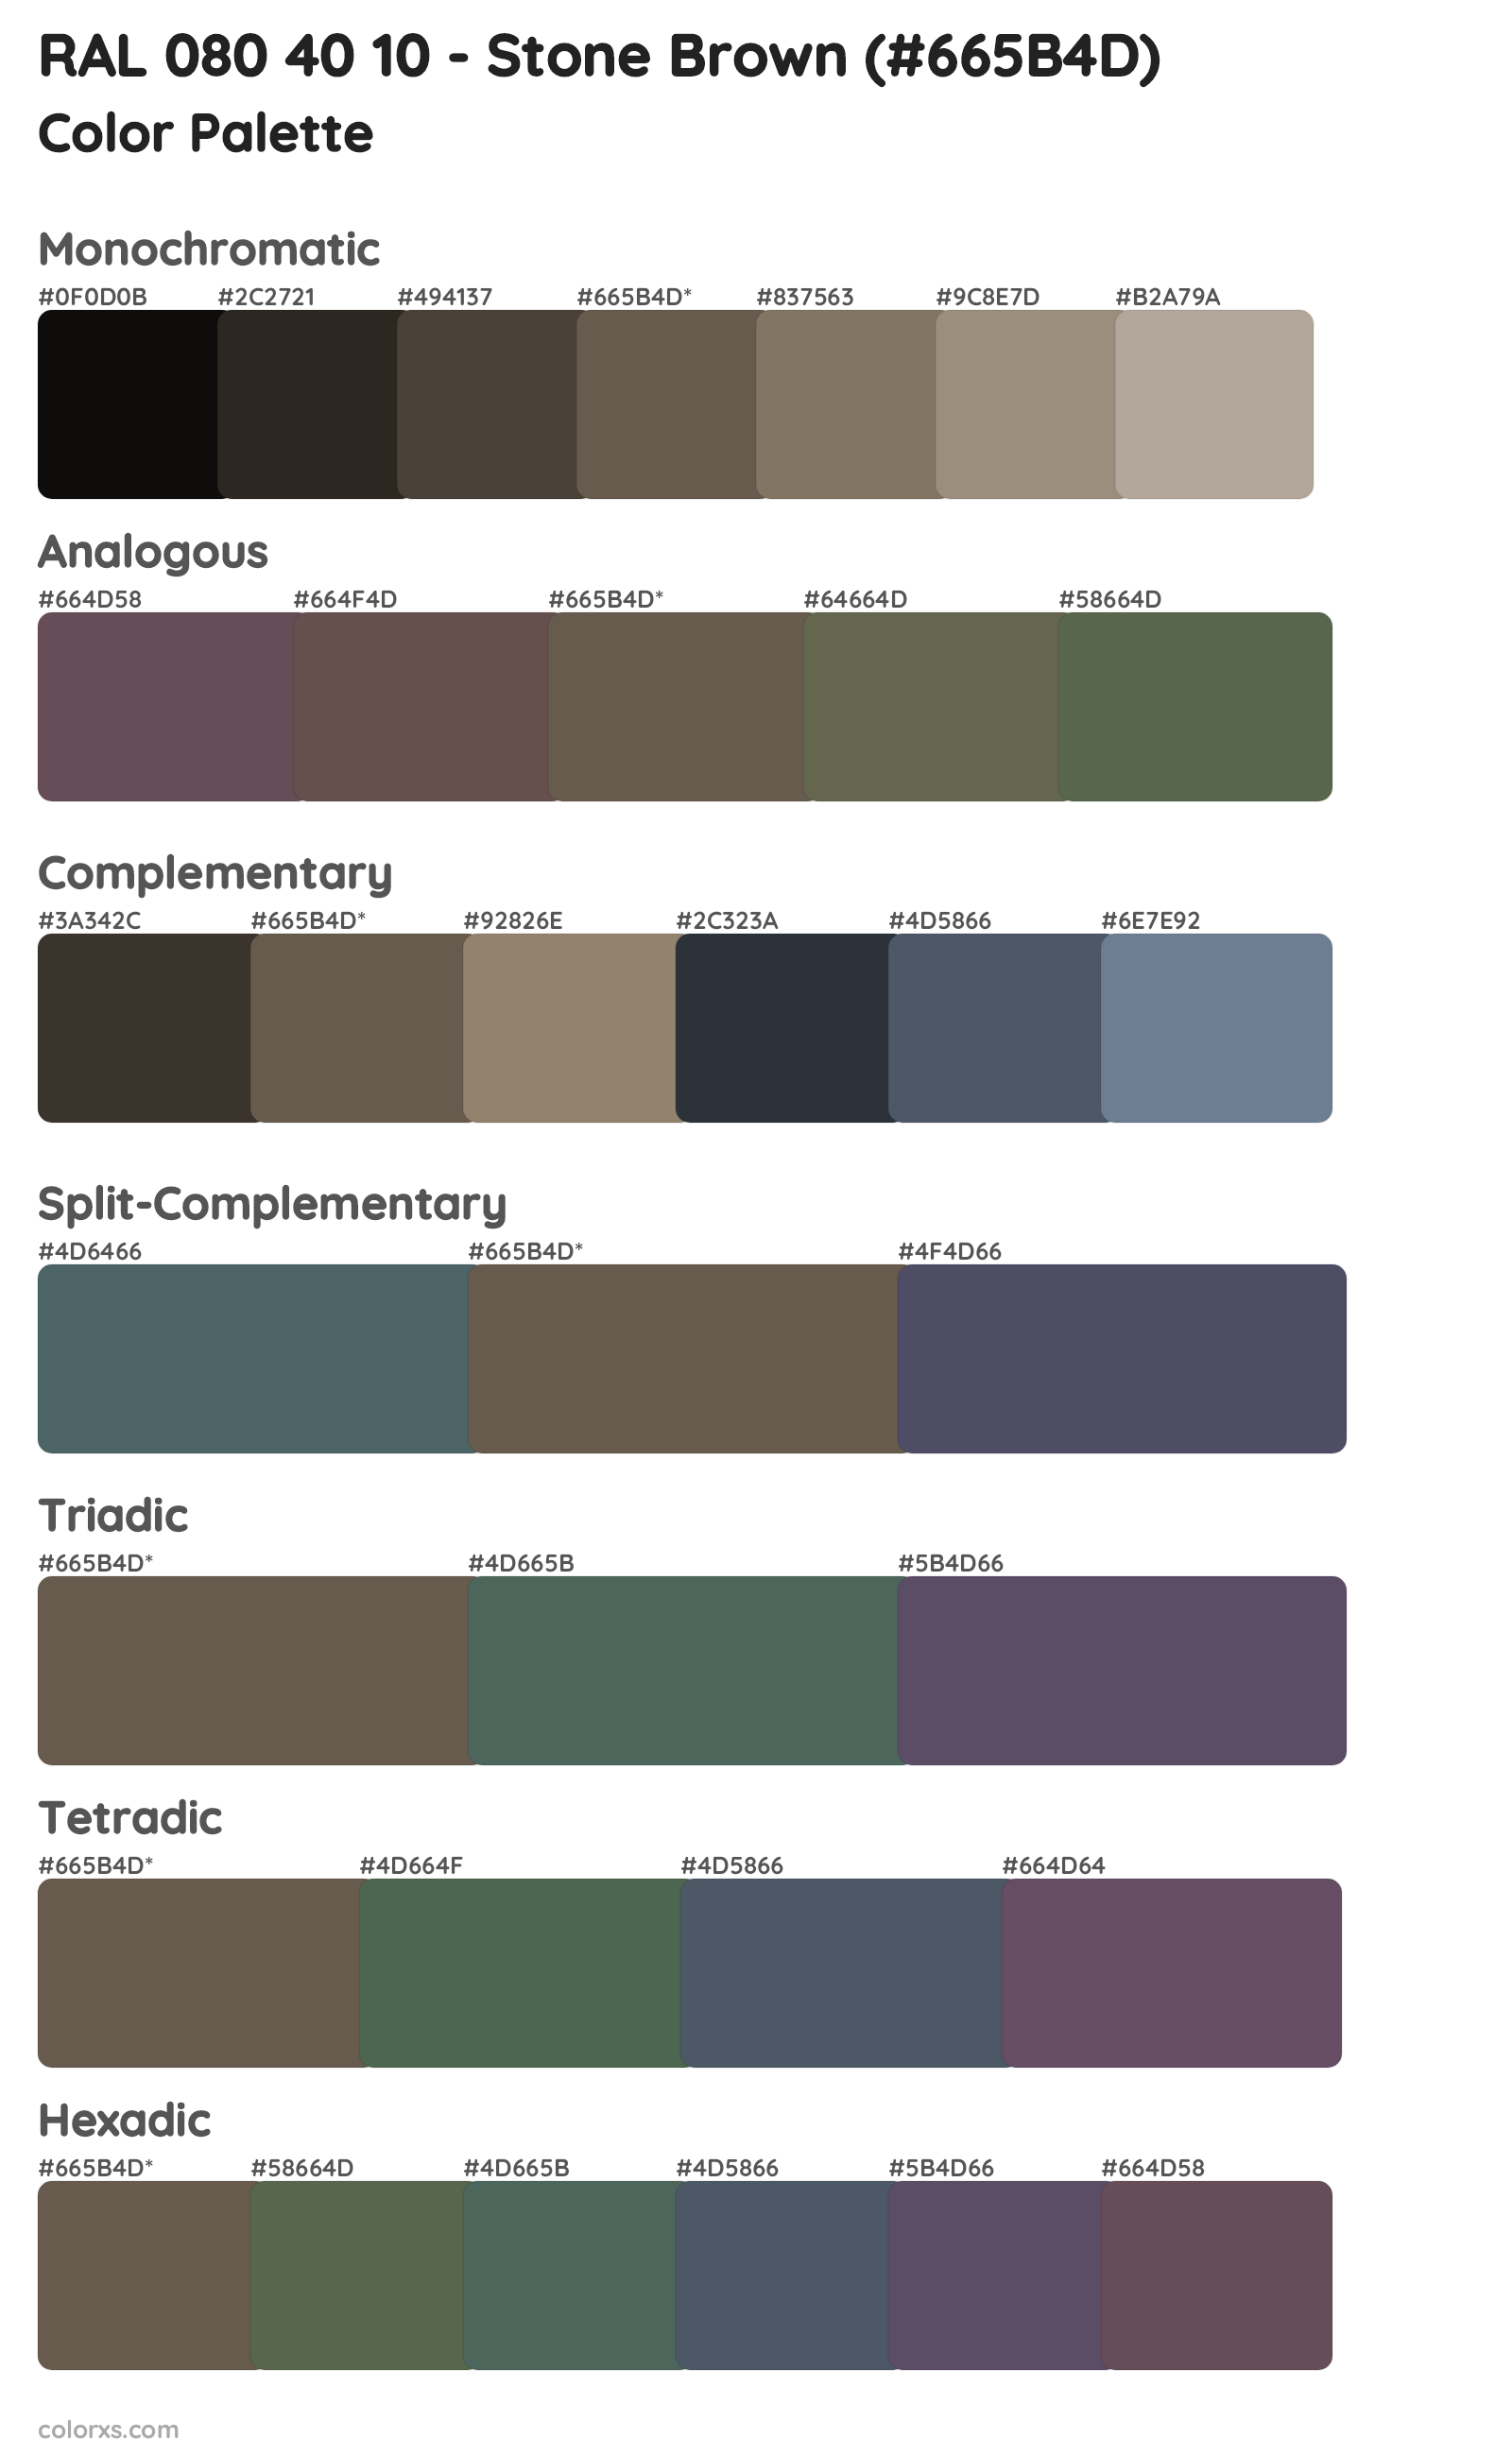 RAL 080 40 10 - Stone Brown Color Scheme Palettes